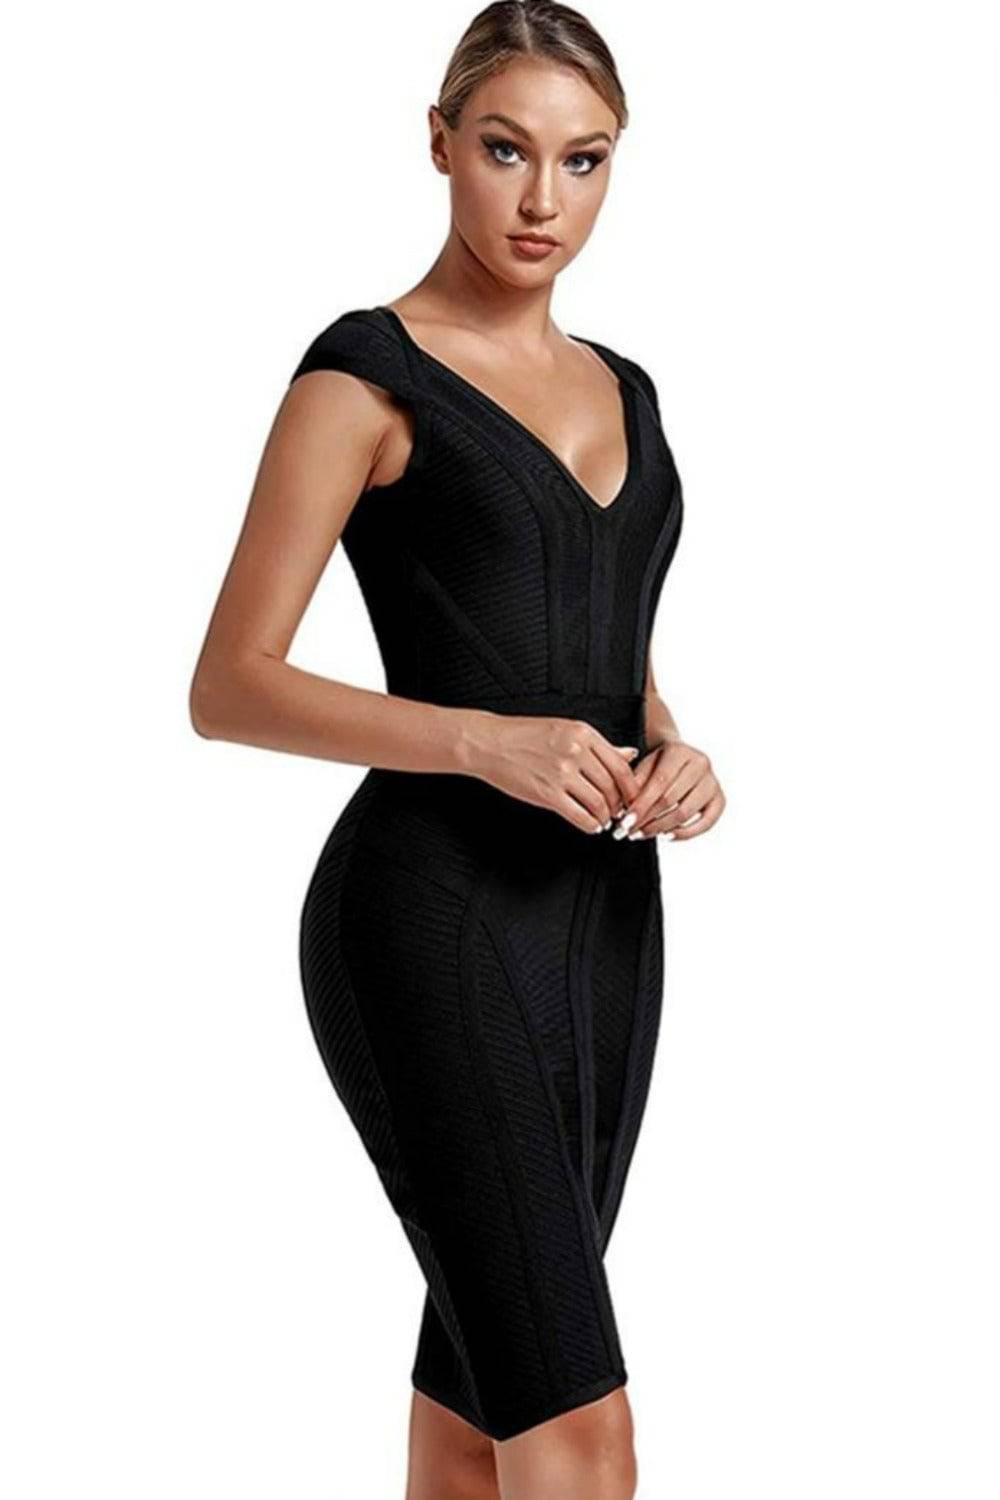 Loren Runway Elegant Short Sleeve Striped Bandage Dress - Black - TGC Boutique - Black Bodycon Dress